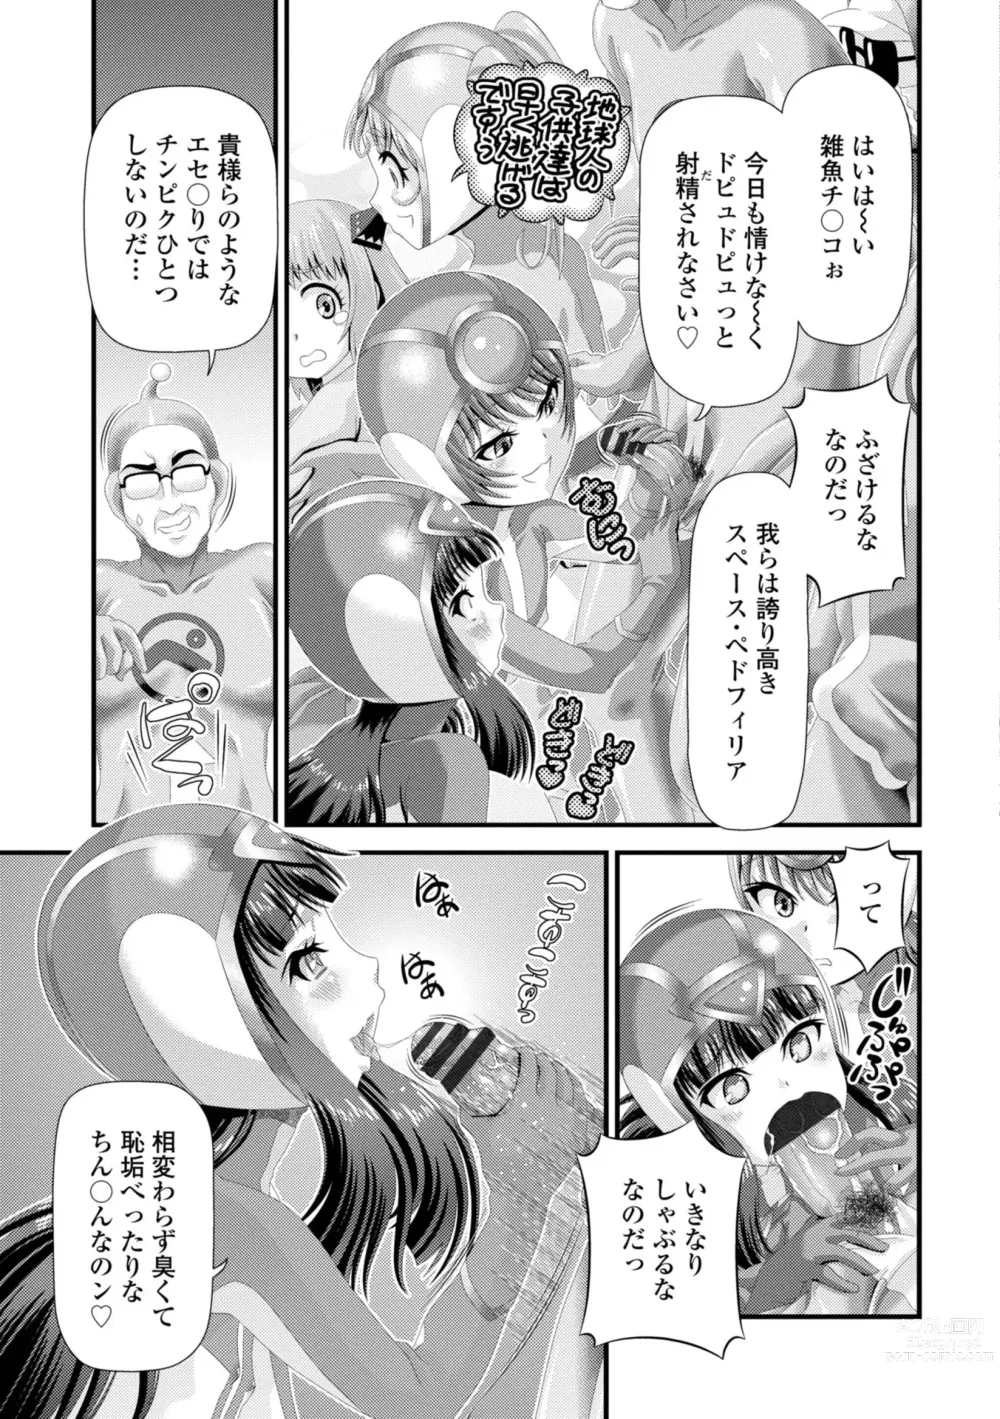 Page 7 of manga minimum material 1